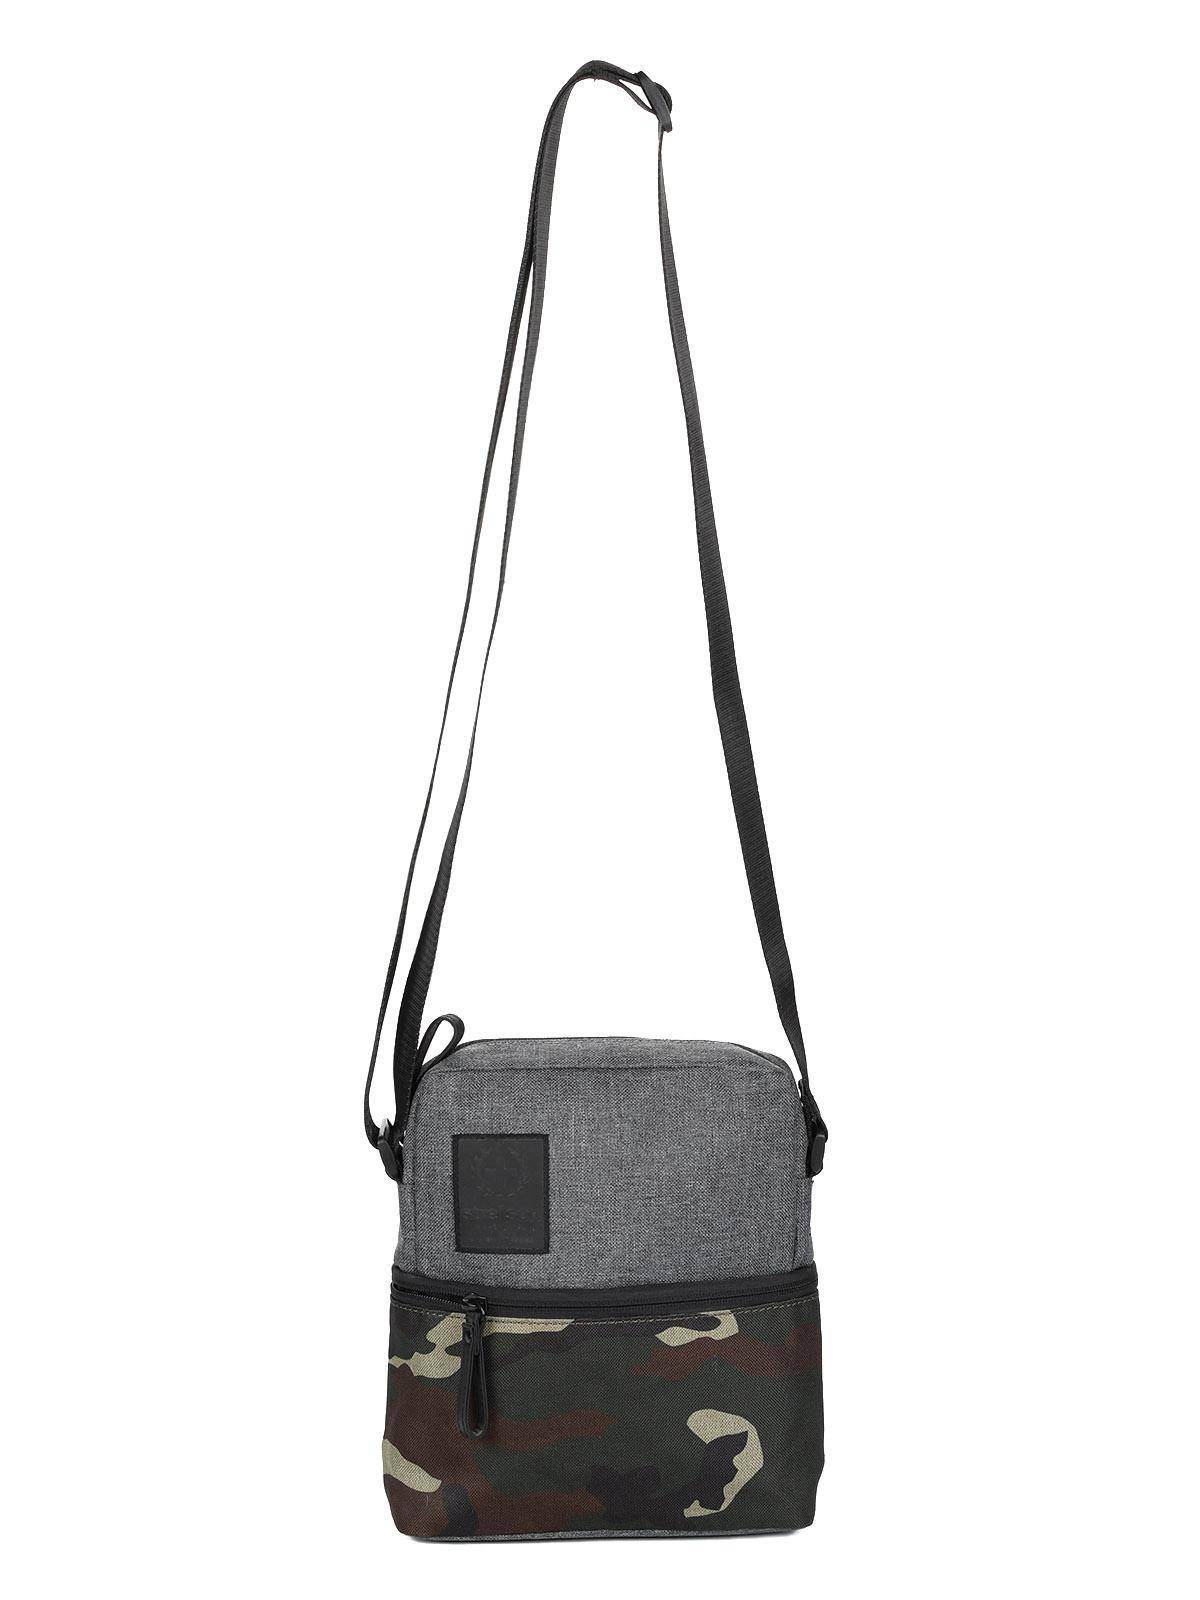 Городская сумка Strellson Bags Swiss cross 2 shoulderbag xsvz 4010002437